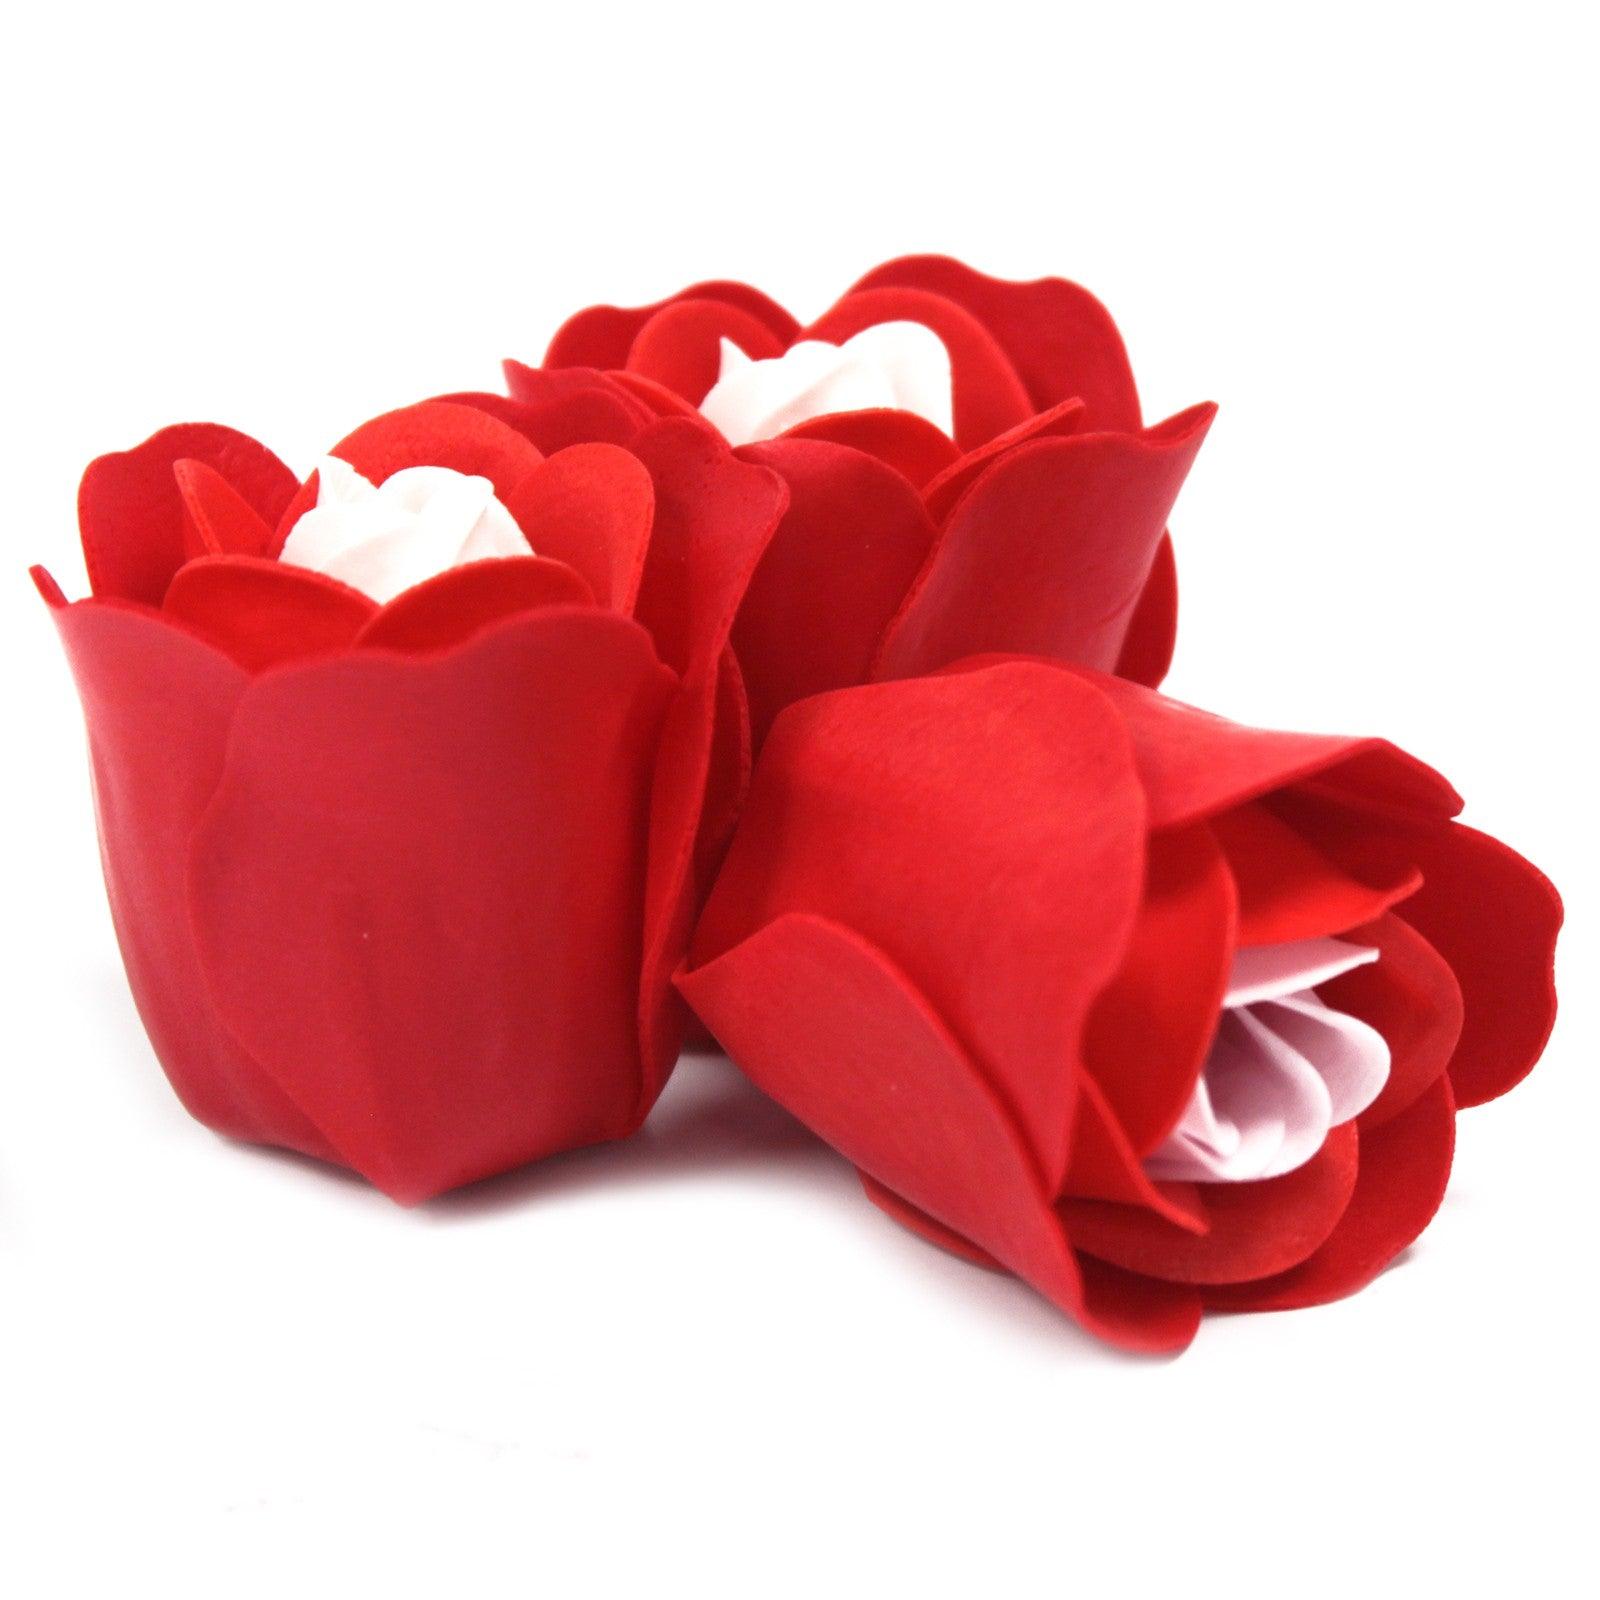 Set of 3 Soap Flower Heart Box - Red Roses - DuvetDay.co.uk